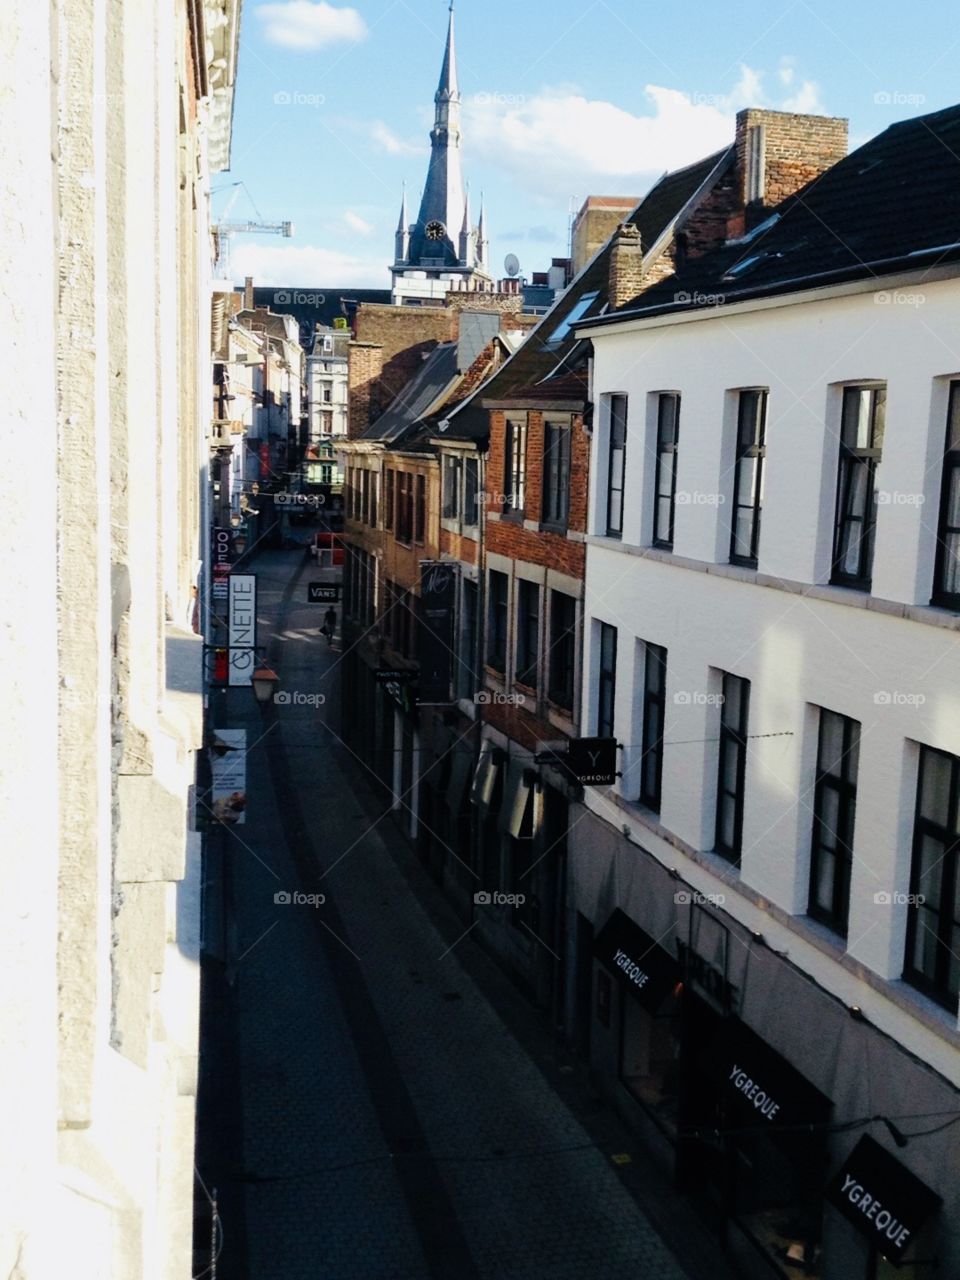 Rue Saint-Adalbert Street of shops and apartments in Liège town centre, Belgium 